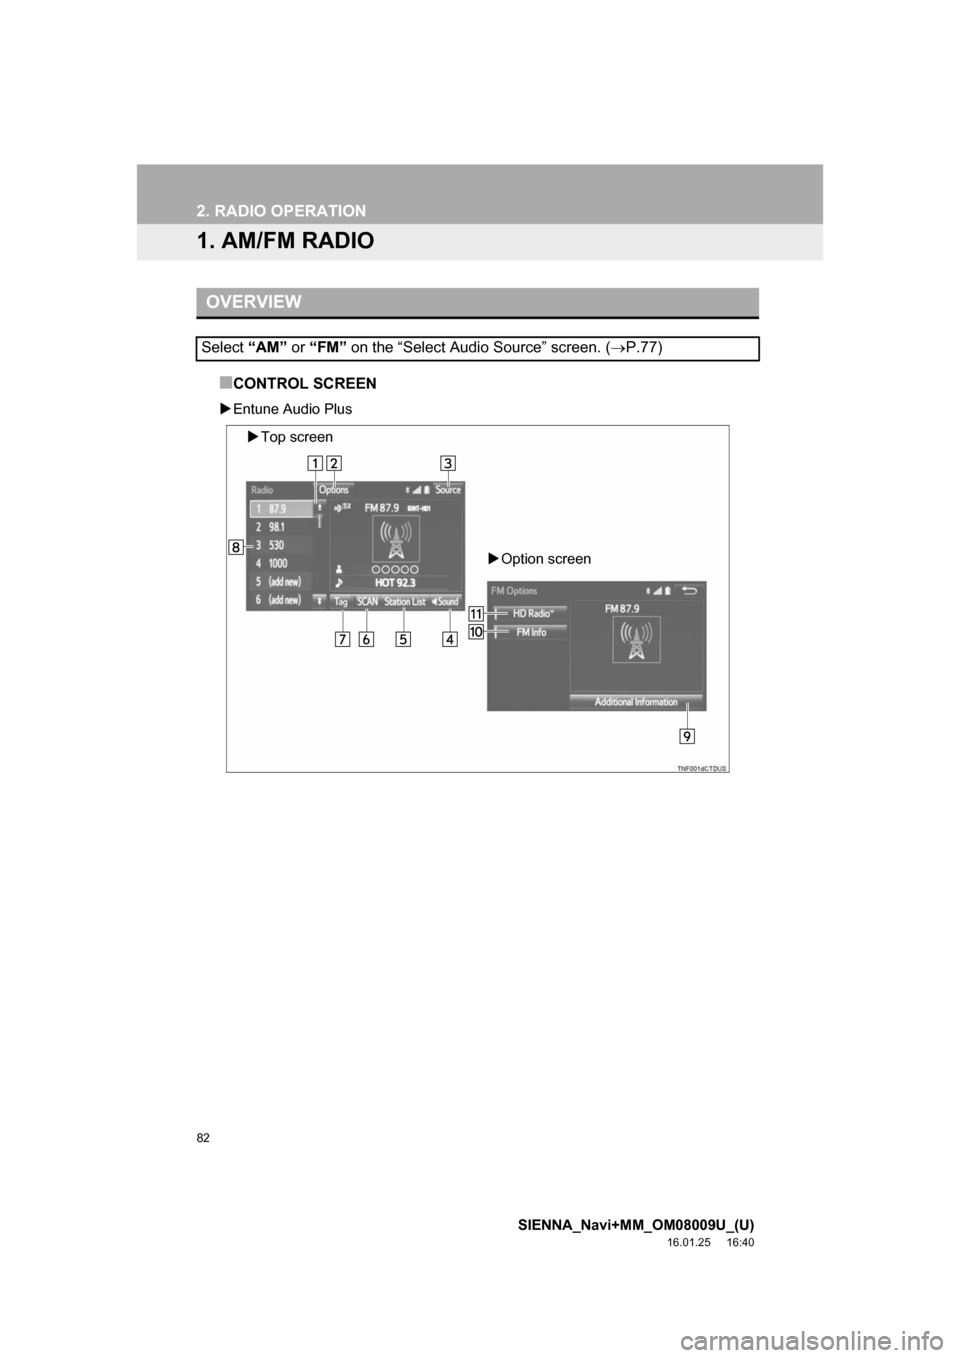 TOYOTA SIENNA 2017 XL30 / 3.G Navigation Manual 82
SIENNA_Navi+MM_OM08009U_(U)
16.01.25     16:40
2. RADIO OPERATION
1. AM/FM RADIO
■CONTROL SCREEN
Entune Audio Plus
OVERVIEW
Select  “AM” or “FM”  on the “Select Audio Source” scree